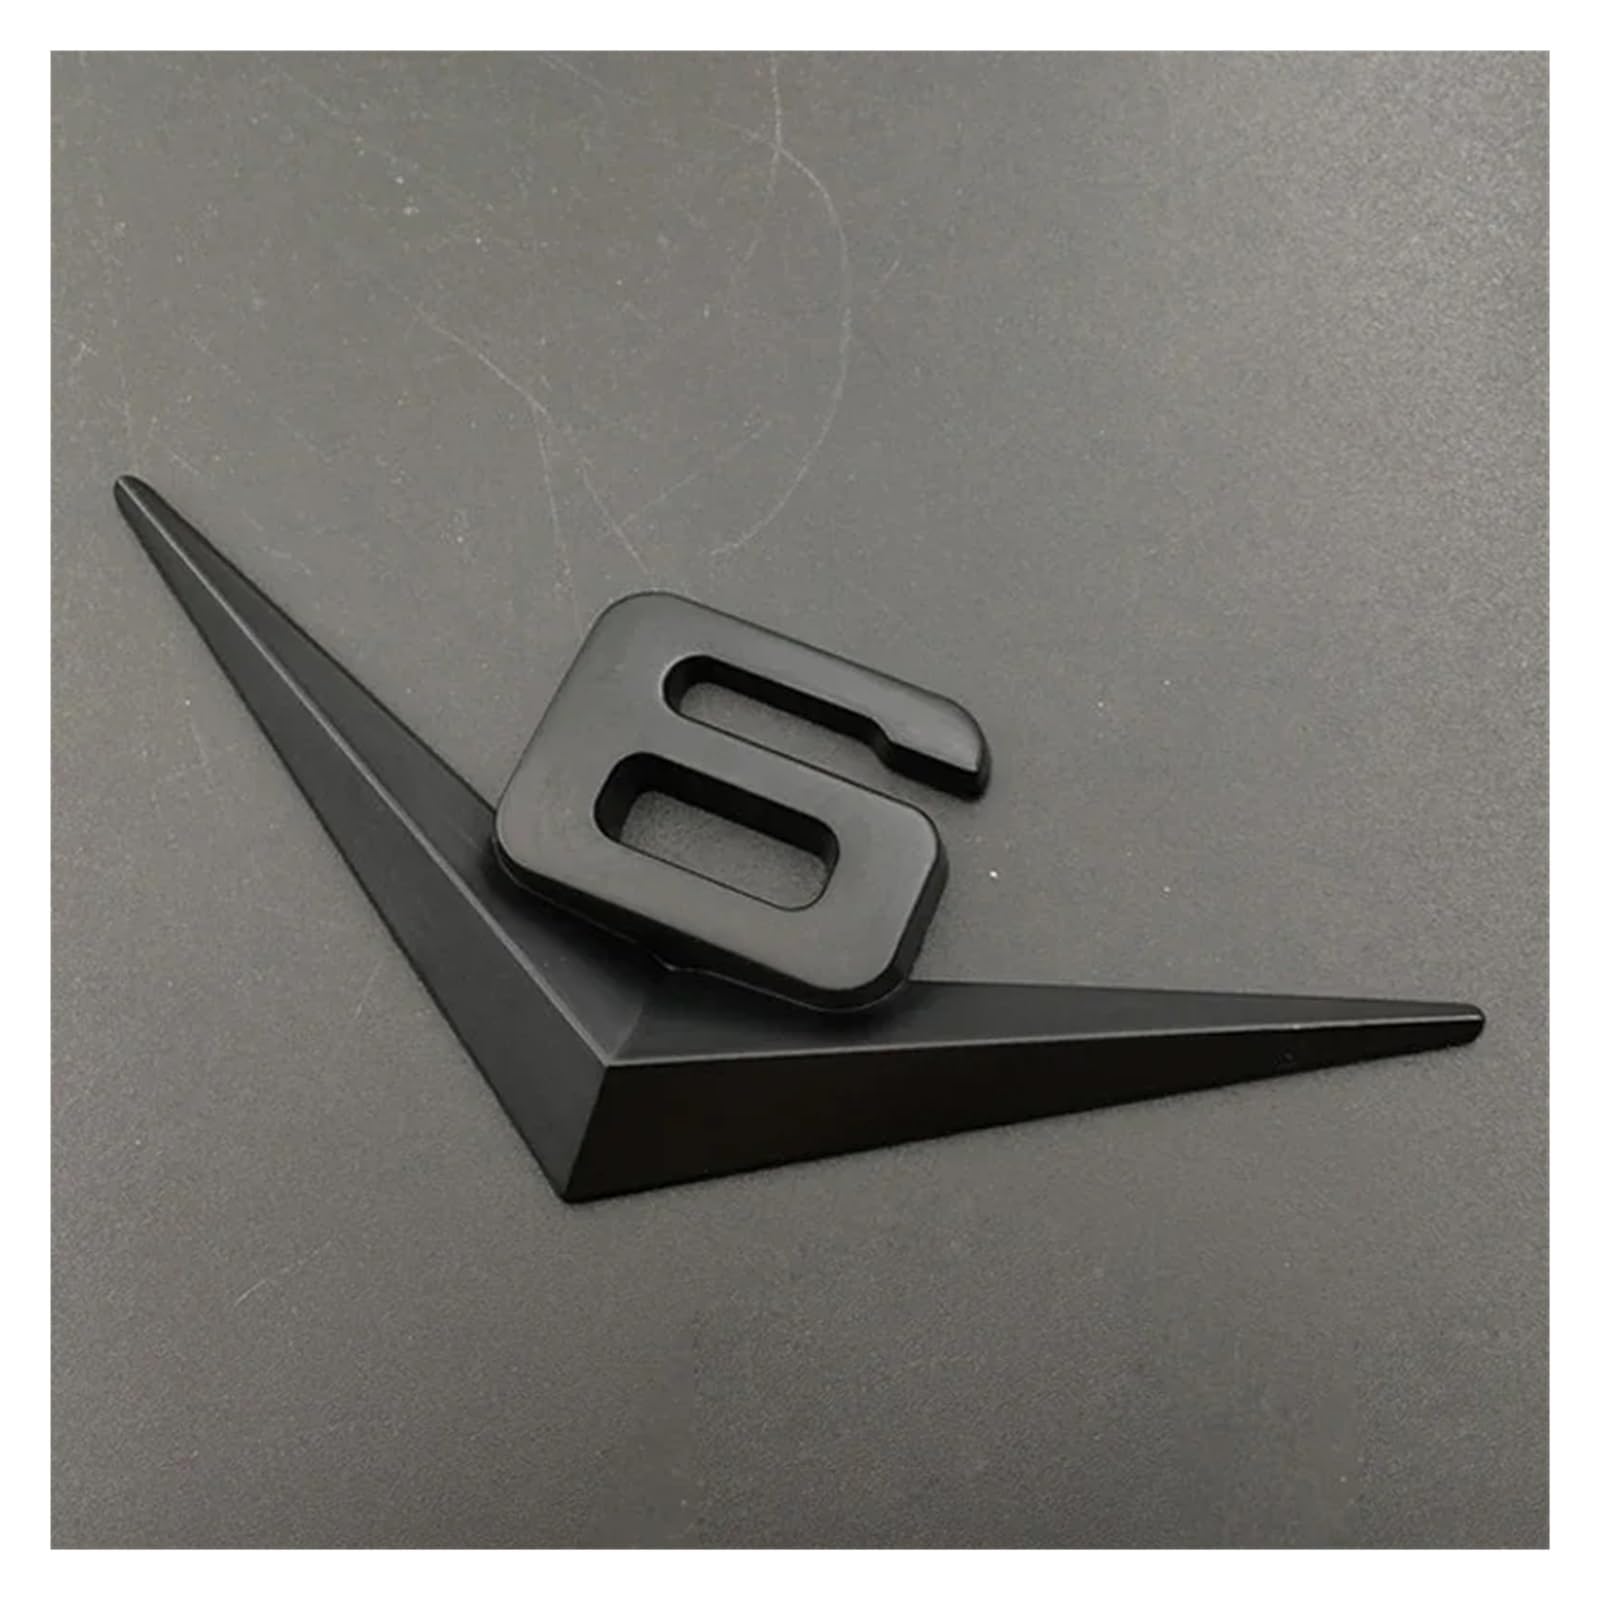 AQXYWQOL 3D Metall Chrom Schwarz V6 V8 Buchstaben Hinten Kofferraum Kotflügel Abzeichen Emblem Aufkleber Aufkleber Farbe ist konstant, verblasst nicht und beschädigt(V6 Black) von AQXYWQOL